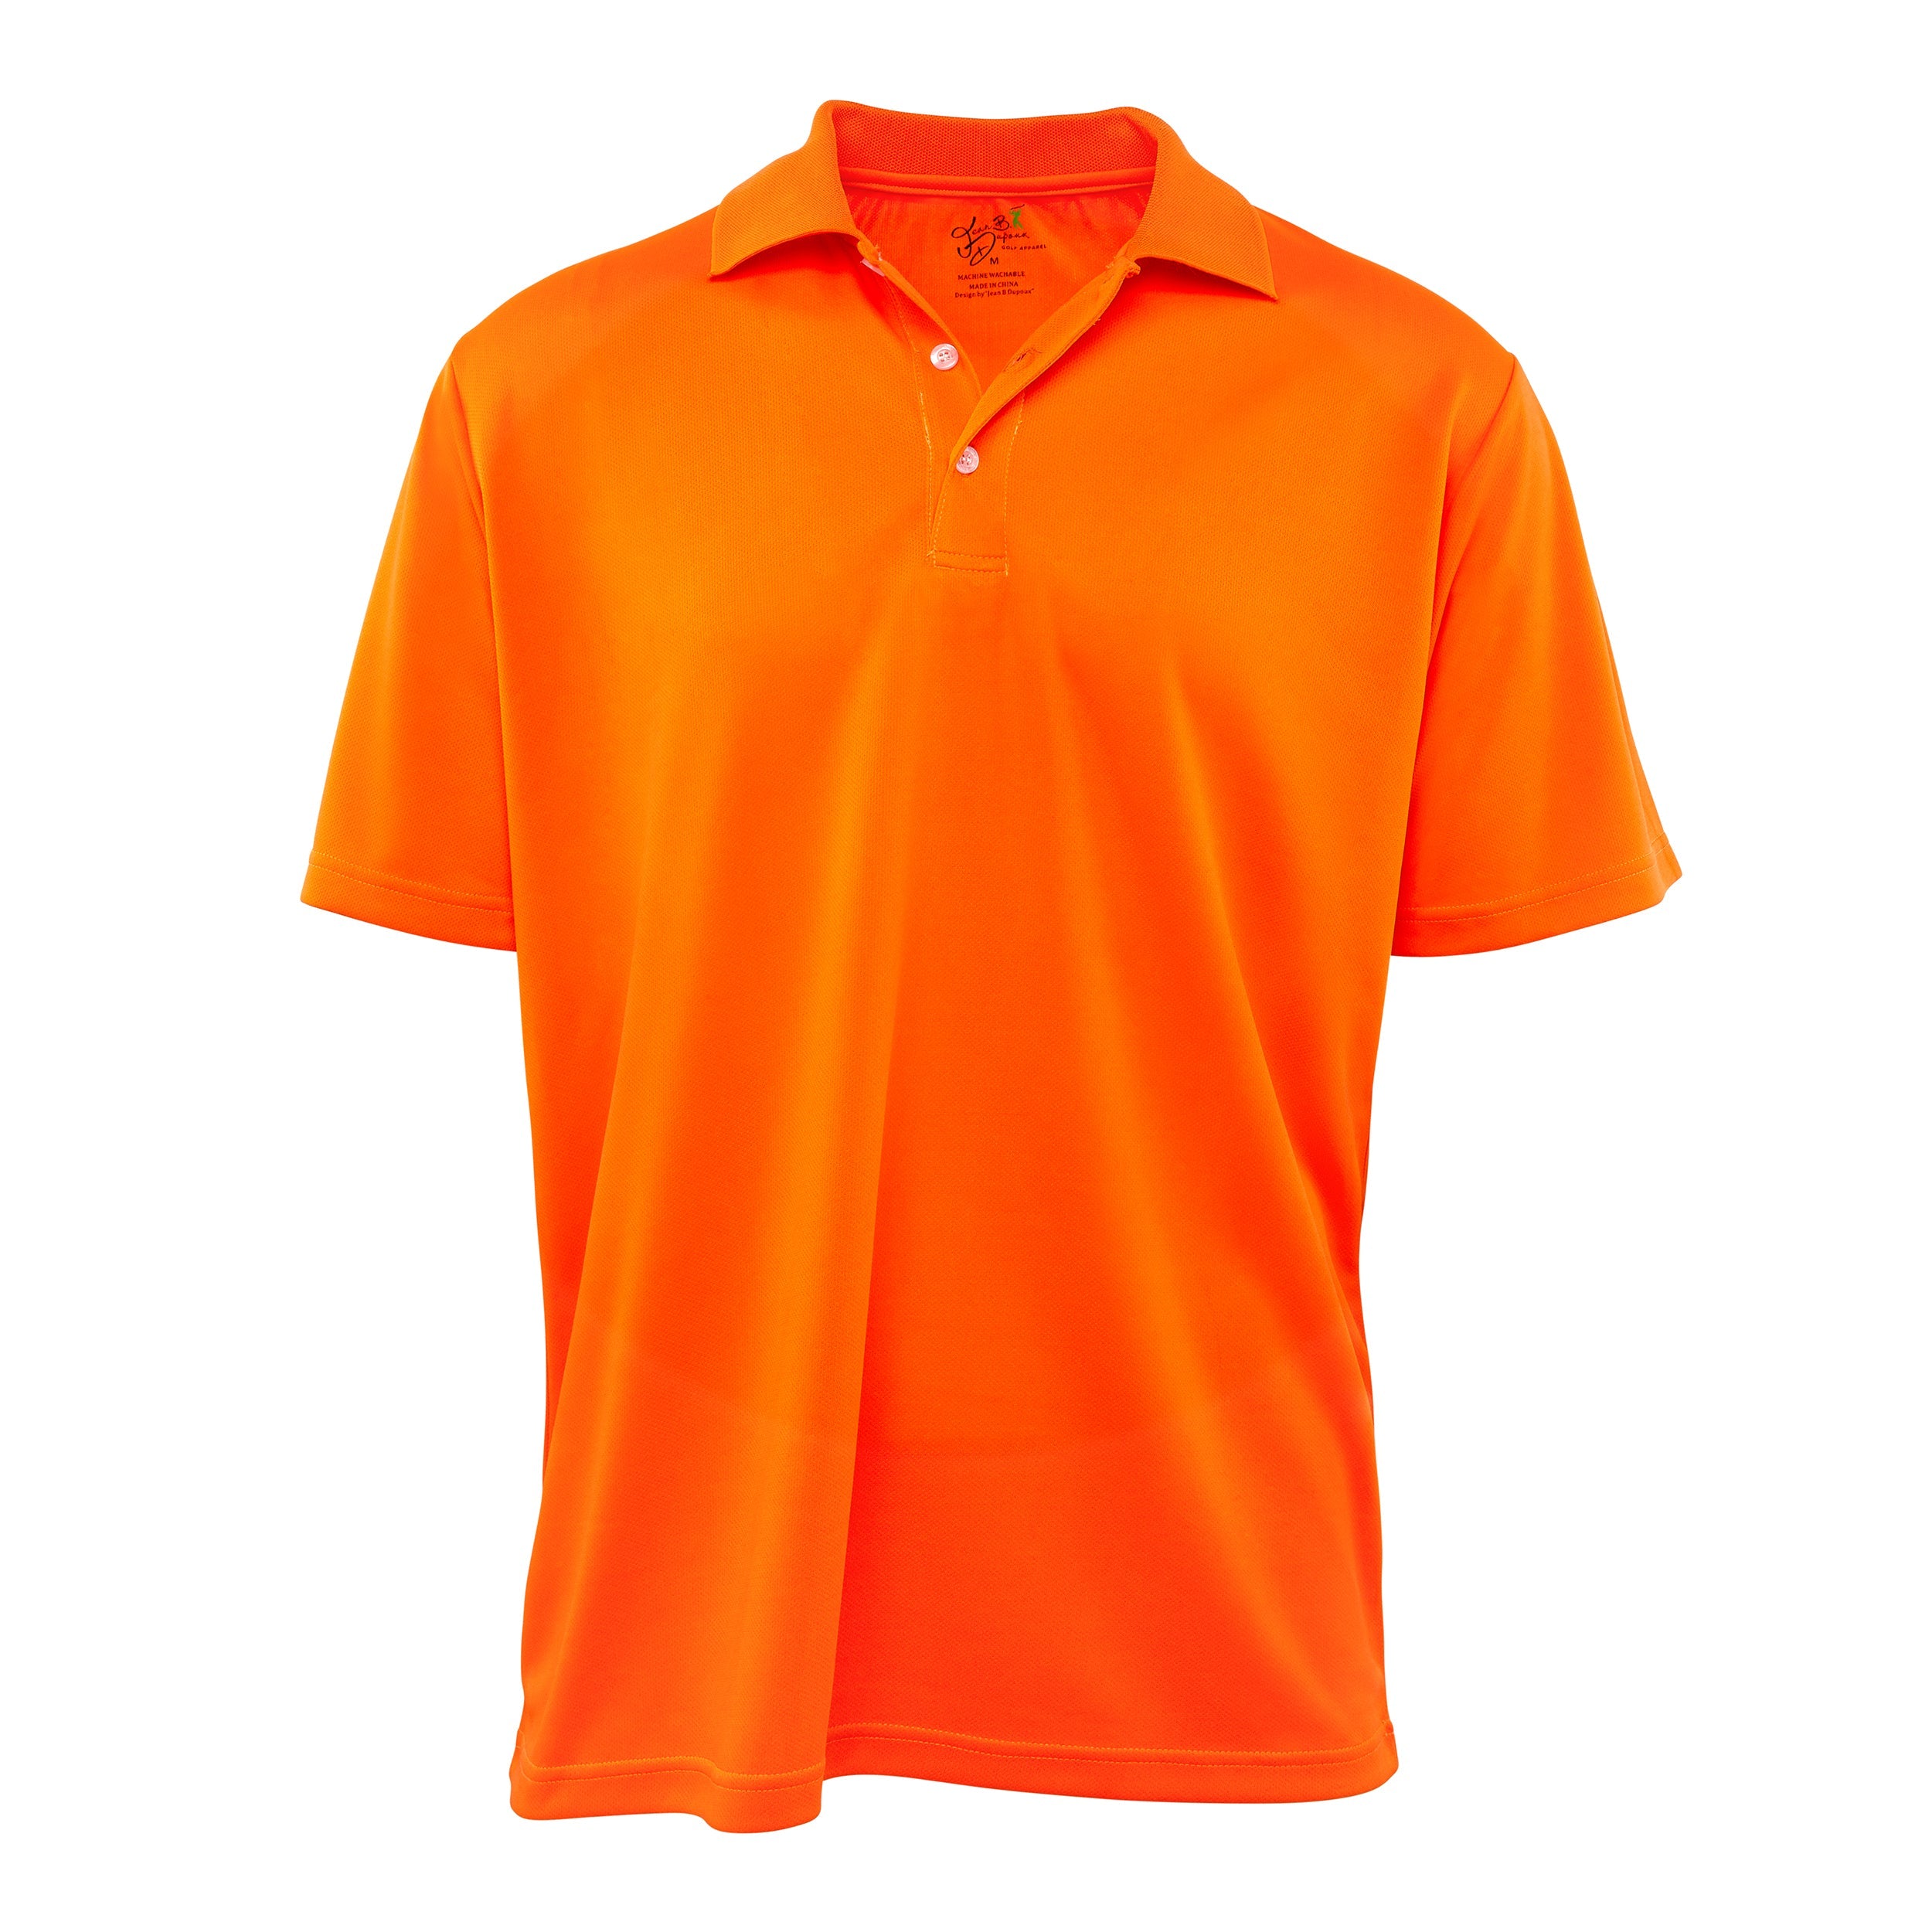 Dri-FIT Golf Shirts - Men’s Solid Bold Standard Fit Short Sleeve Golf Shirt - mygolfshirts.com